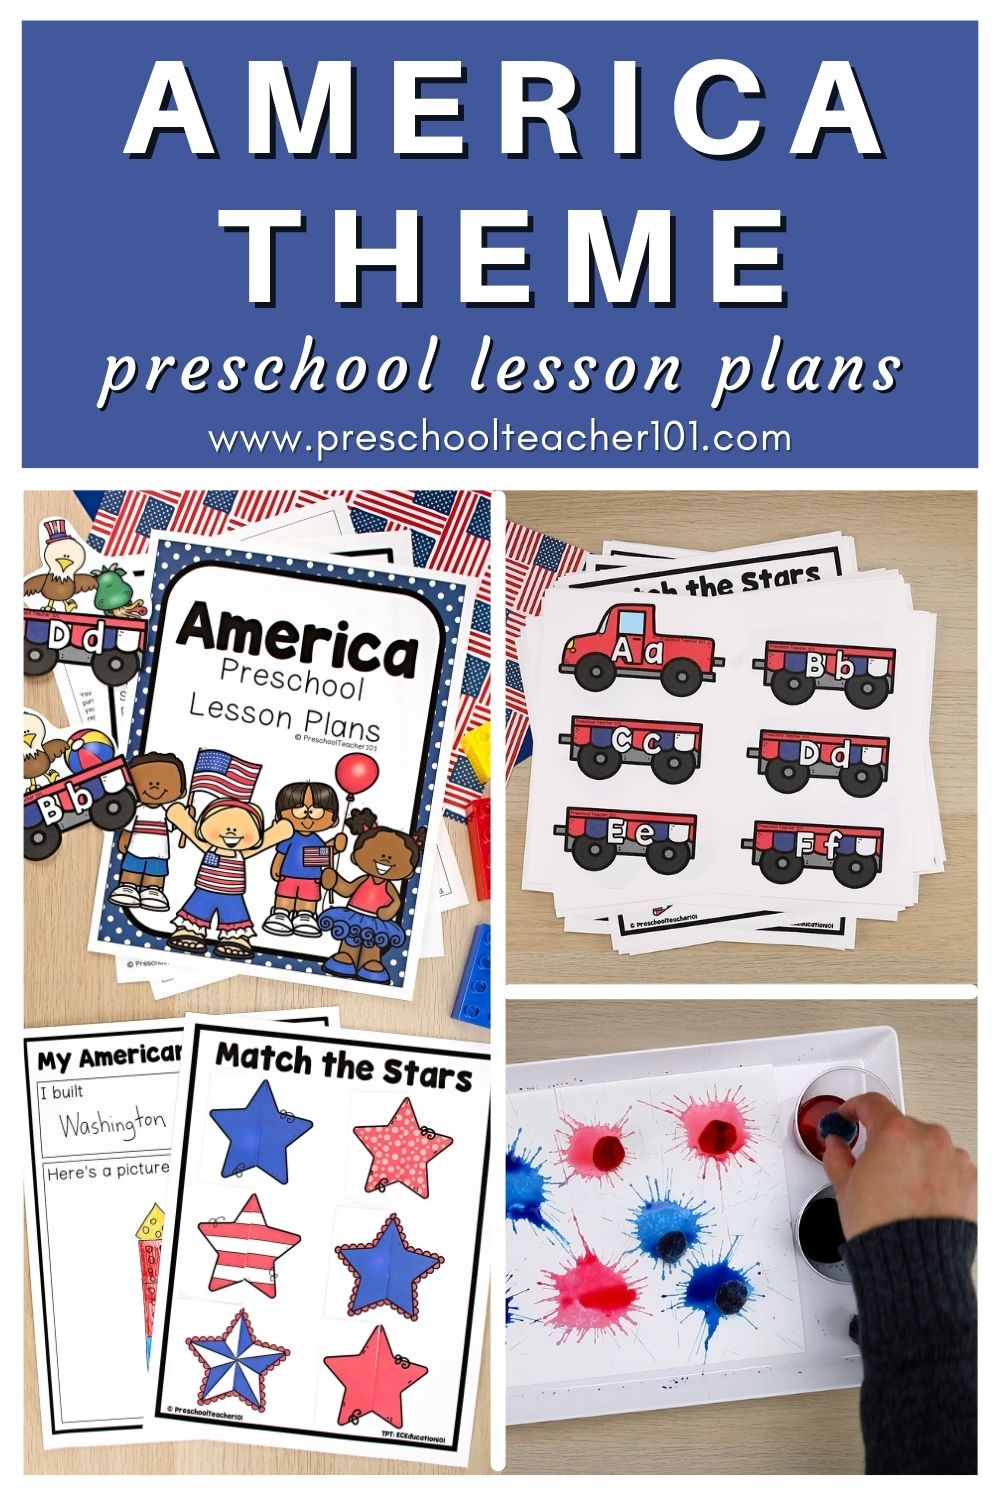 America Theme Preschool LP